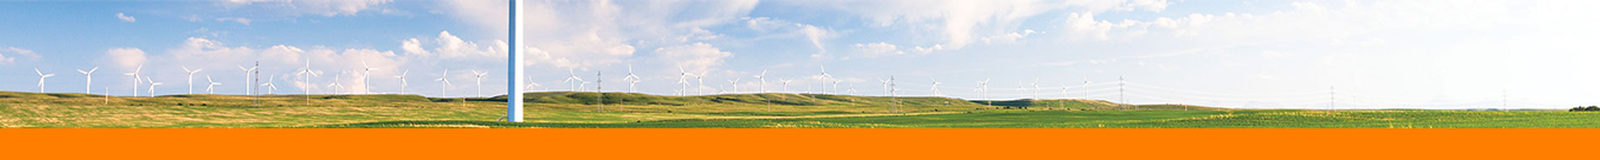 Wind Turbine Power Generator Electrical Maintenance in Saskatchewan by Flyer Electric 